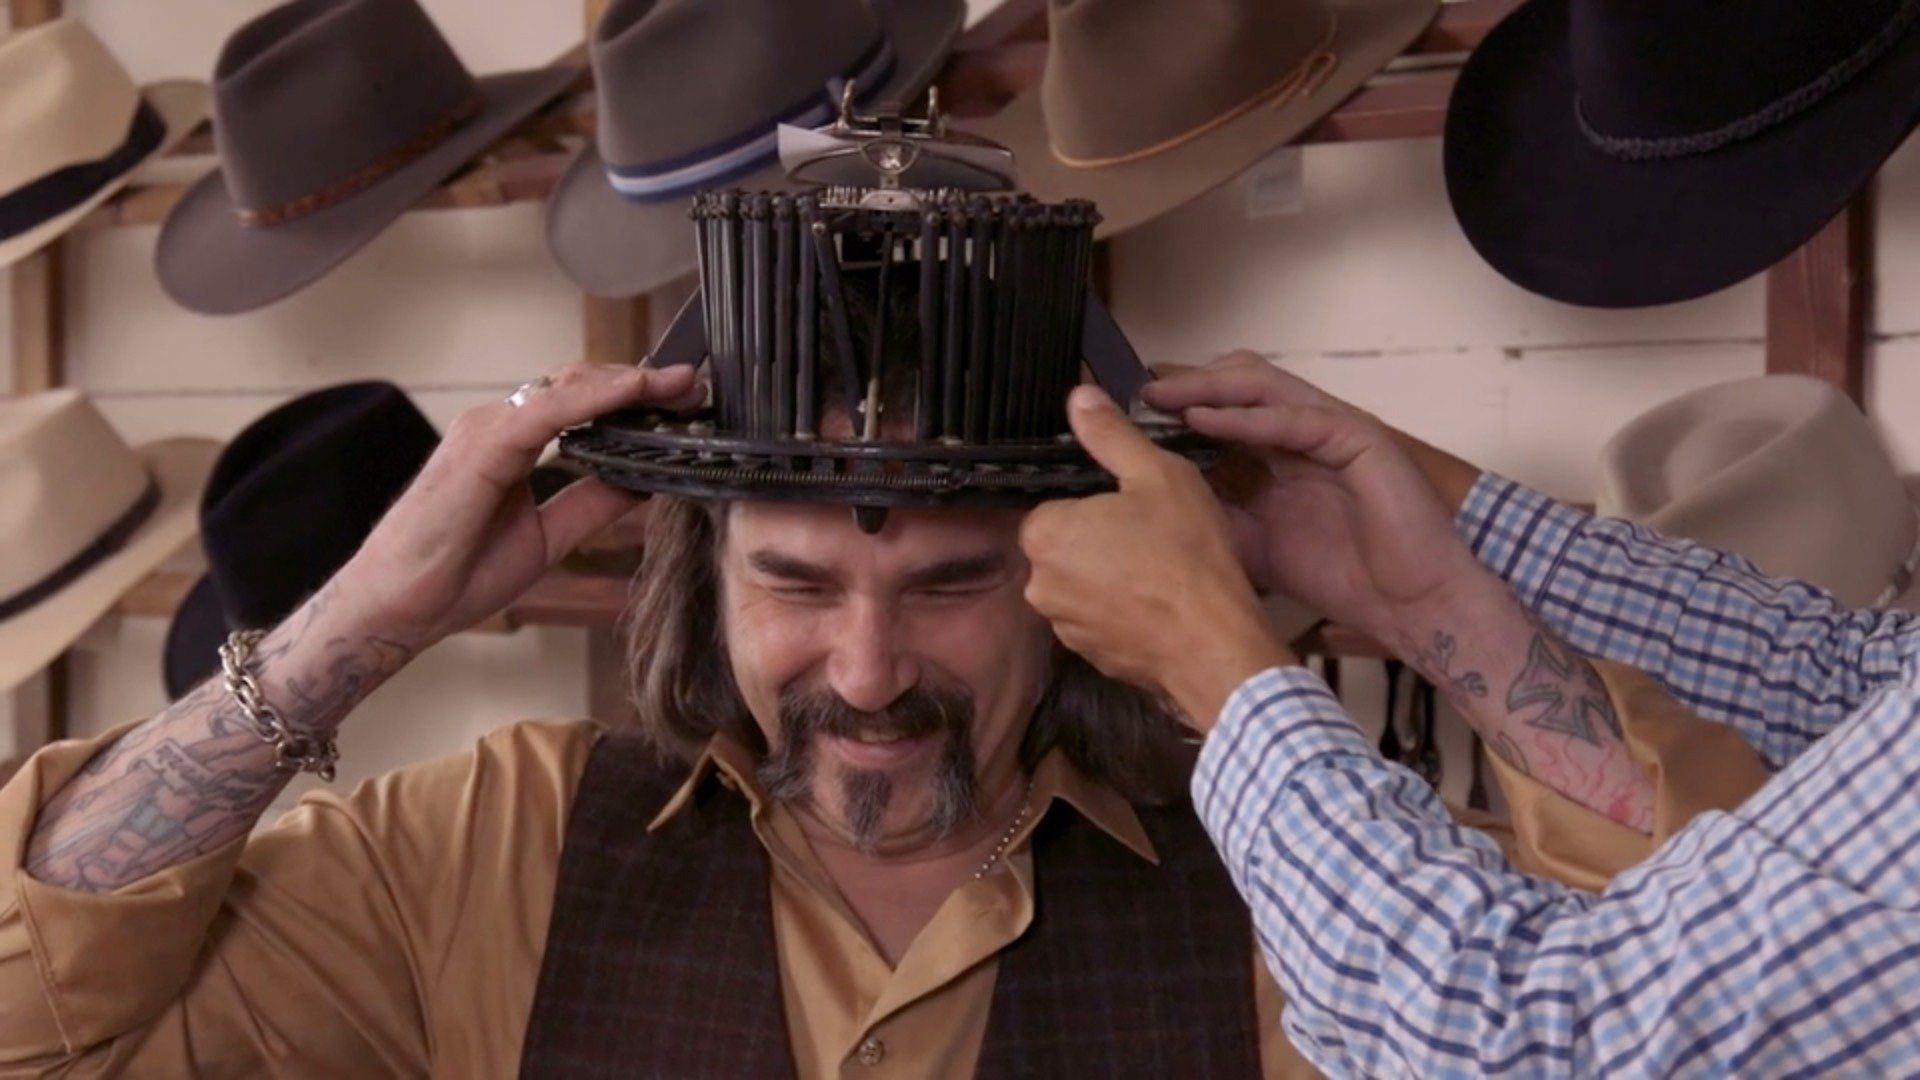 The Cowboy Hat Maker - Craftsman′s Legacy